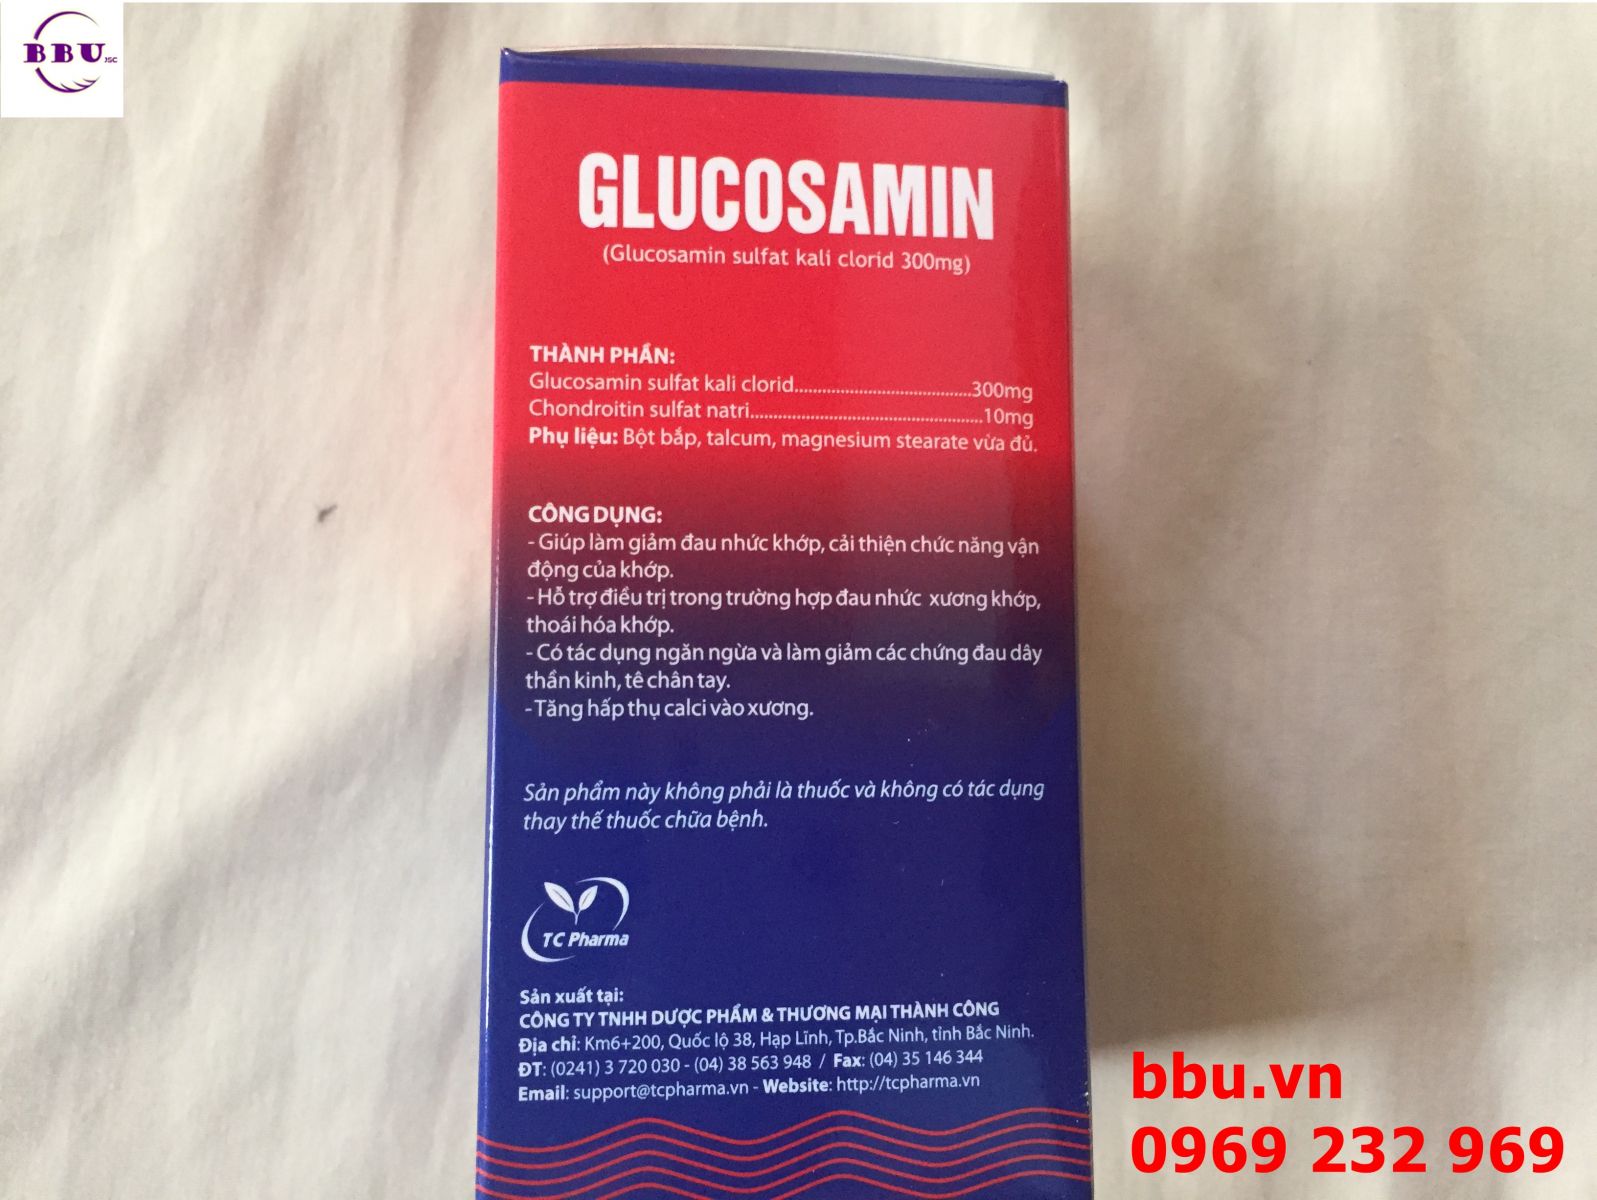 Glucosamin điều trị đau nhức, thoái hóa khớp